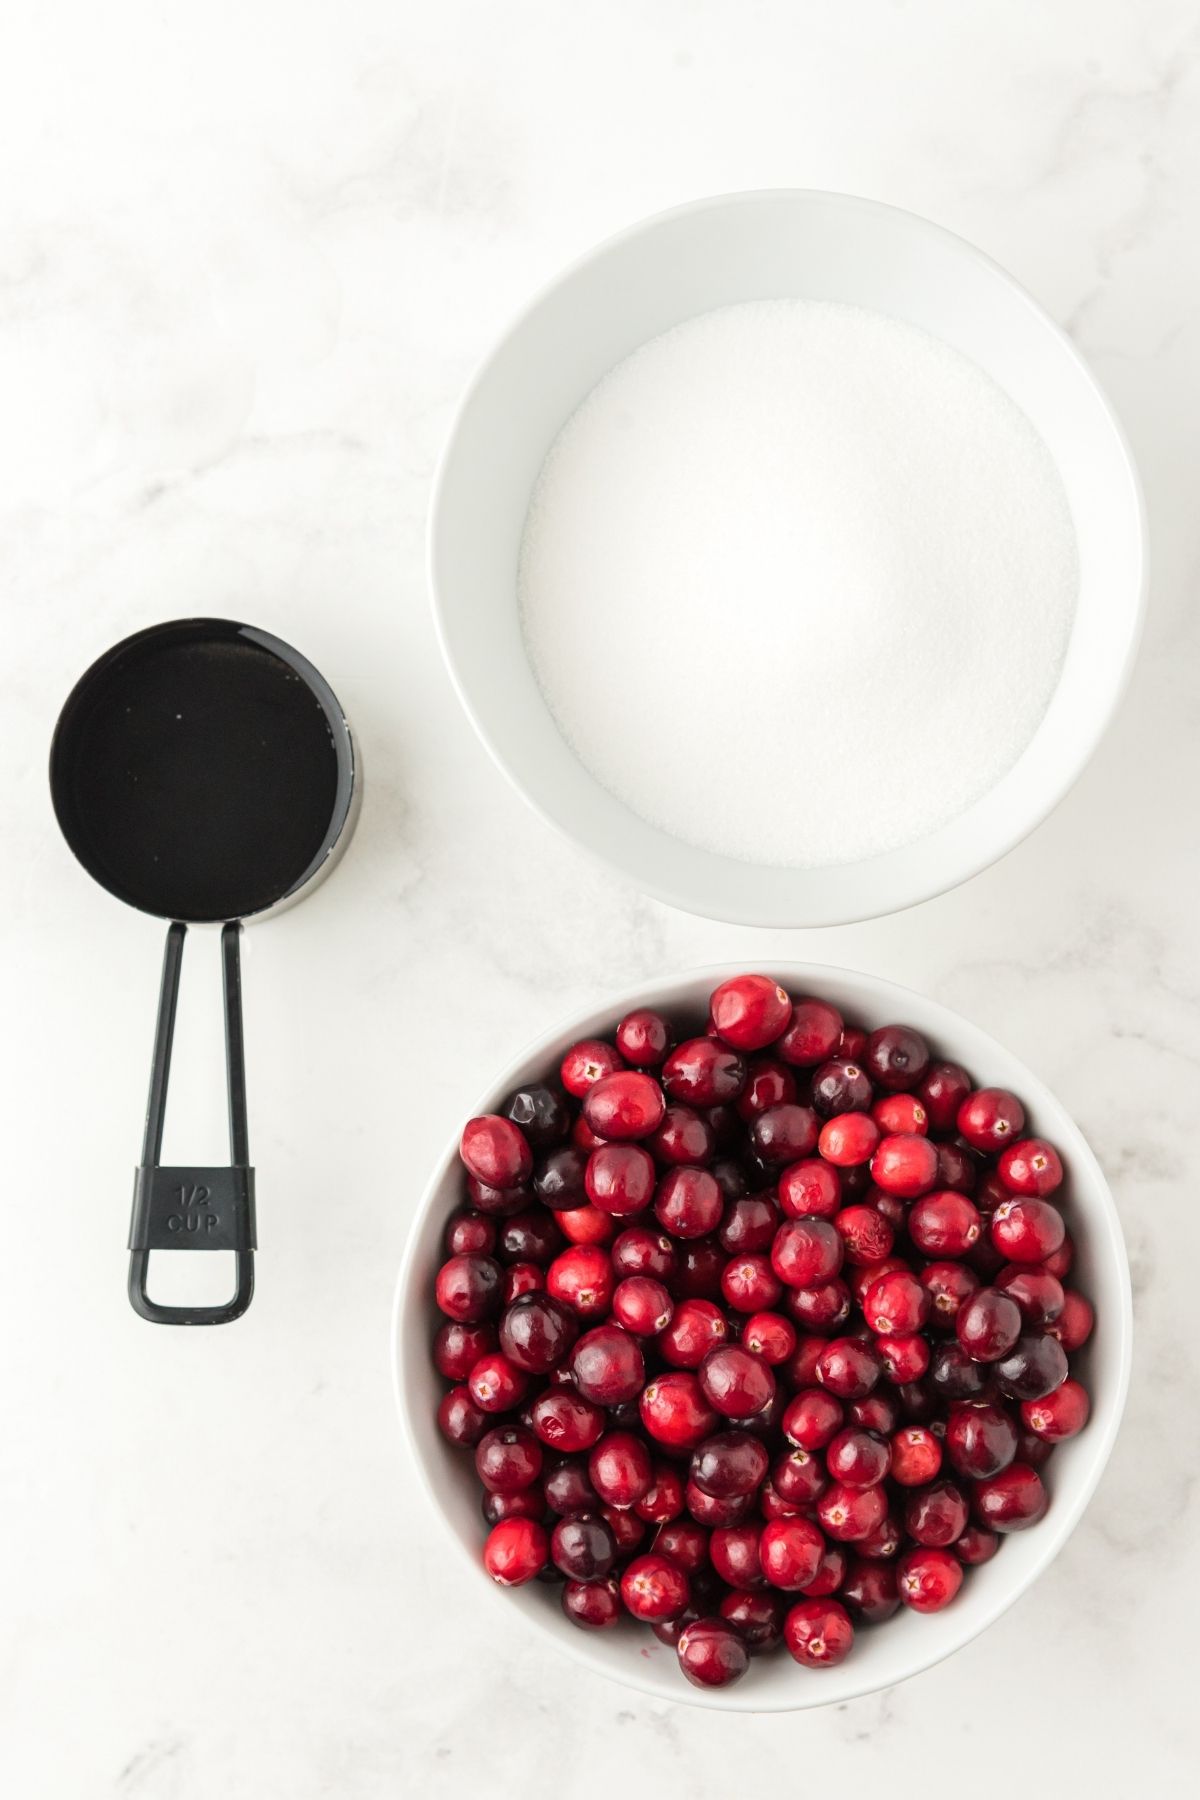 ingredients on white counter: sugar, water, fresh cranberries